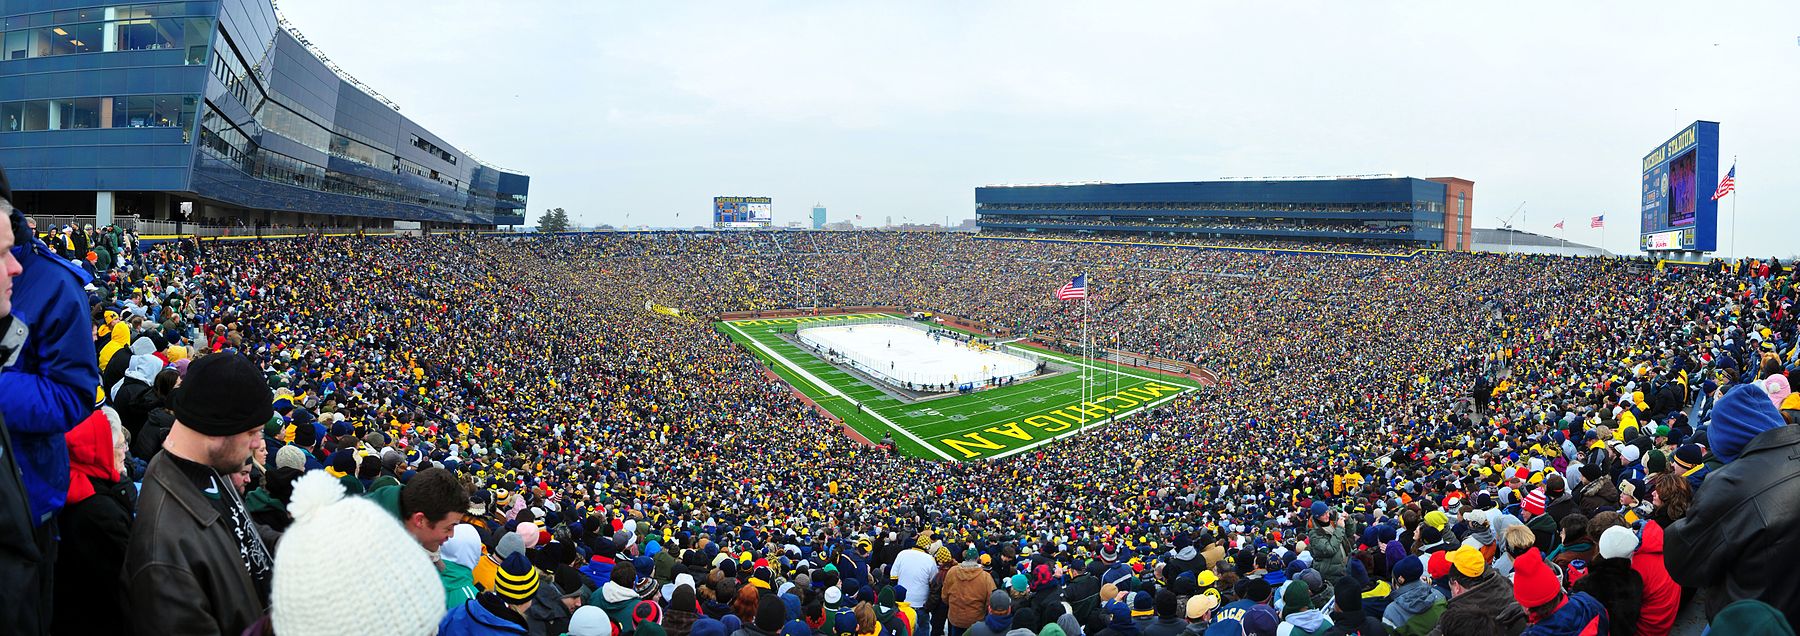 Michigan vs Michigan State playing at Michigan Stadium